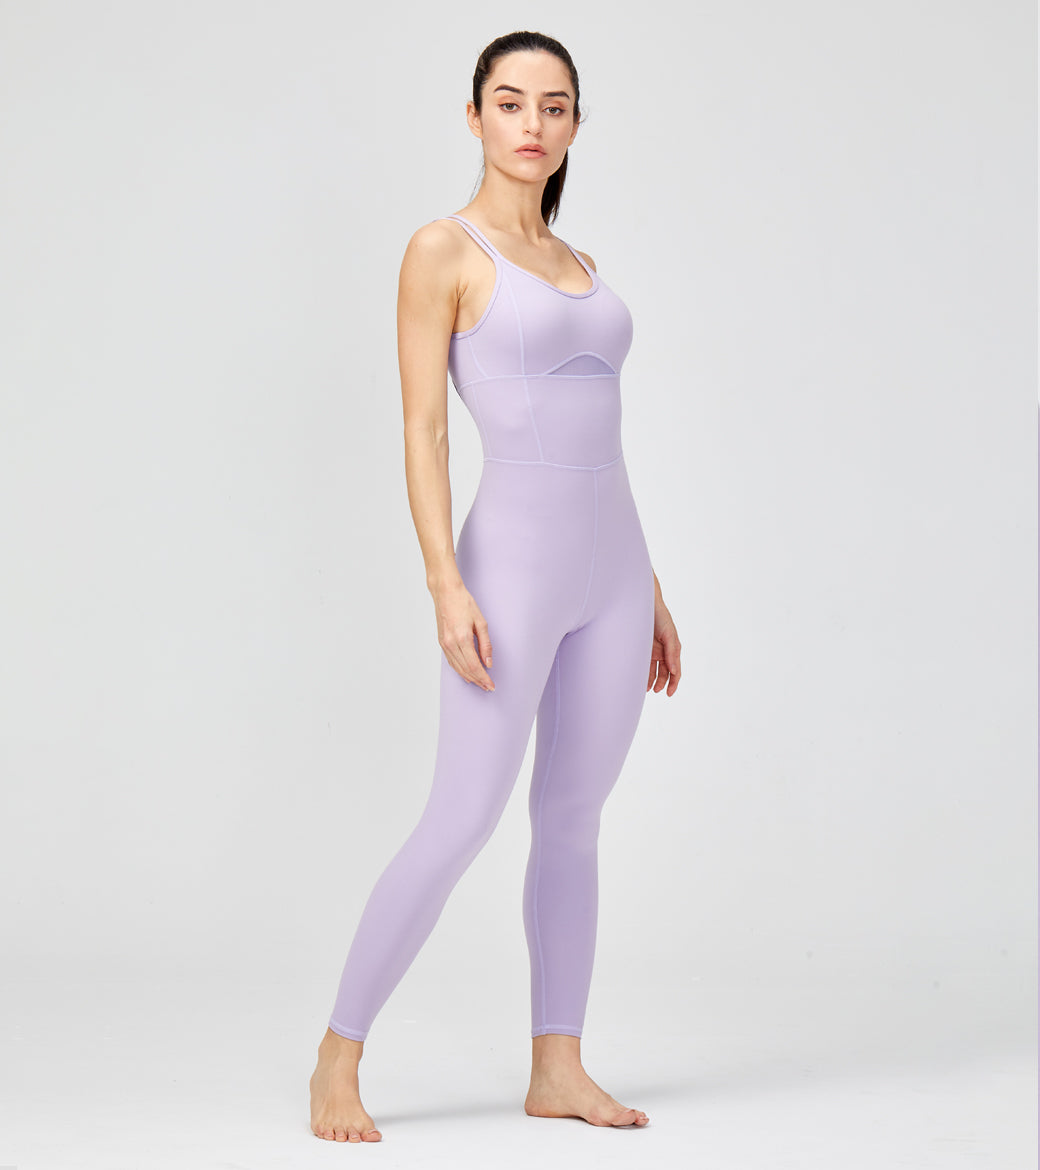 LOVESOFT Purple Sleevesless Backless Cross Yoga Bodycon Rompers